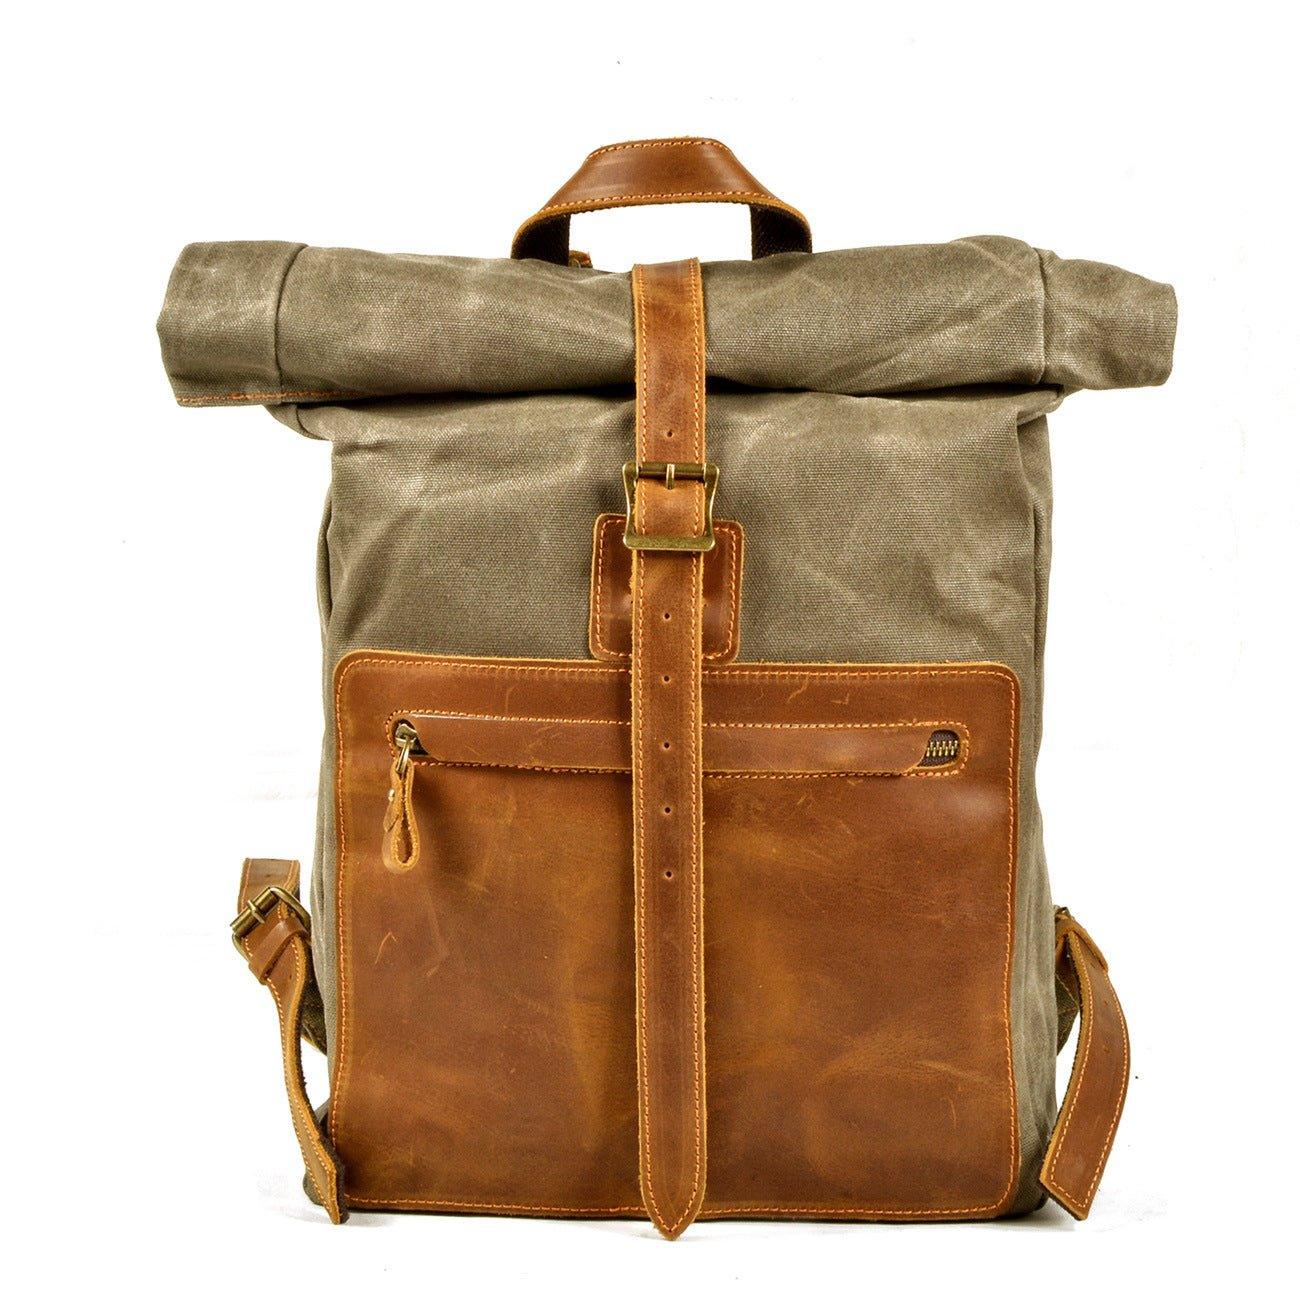 Roll Top Vintage Backpack Canvas with Laptop Sleeve - Woosir